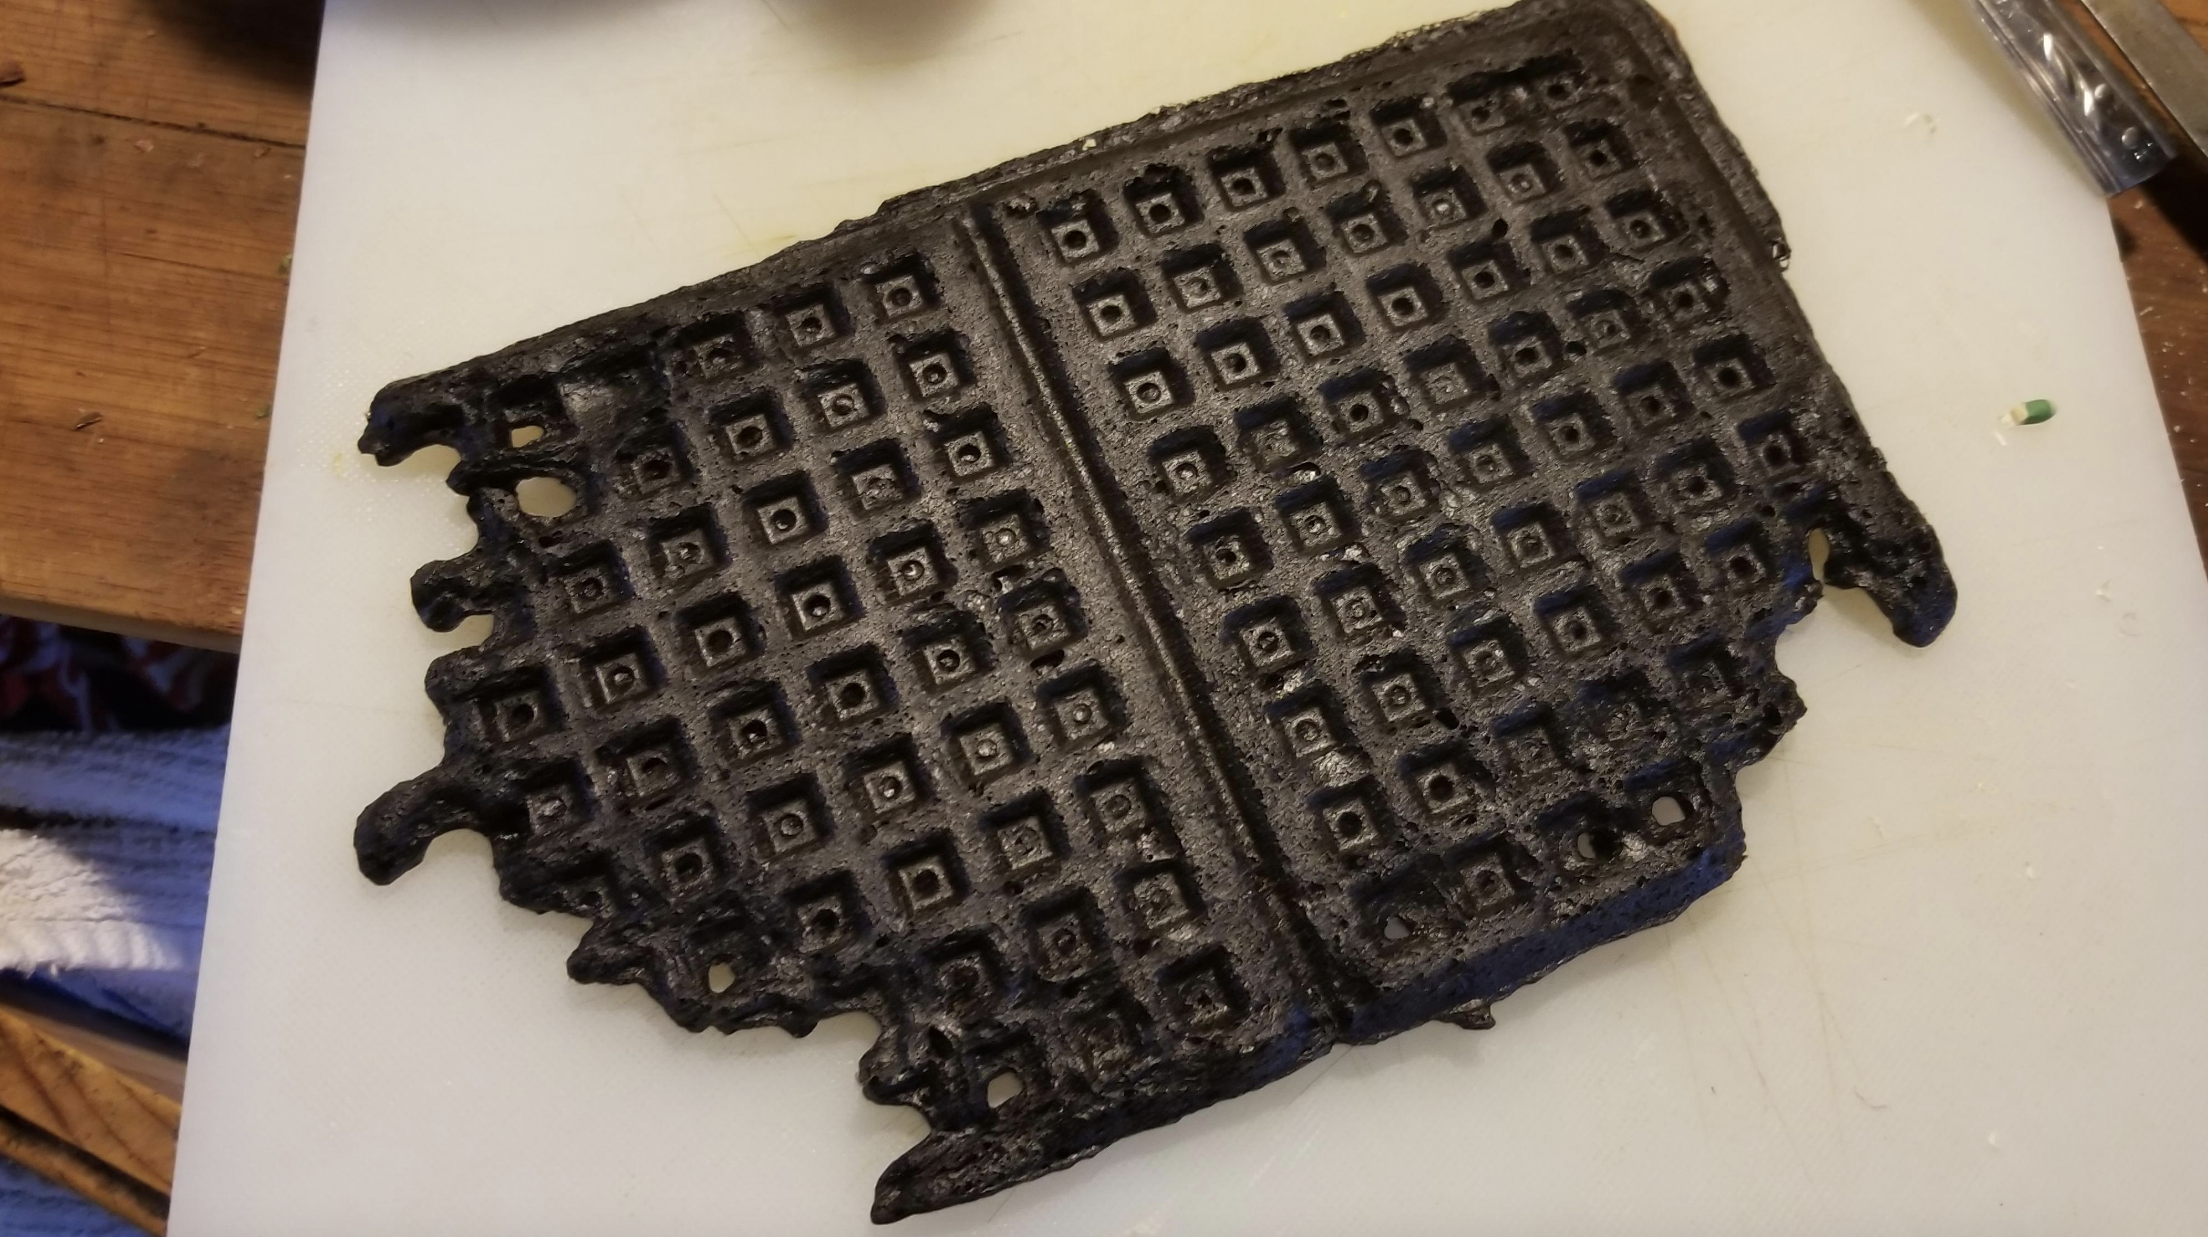 A burnt waffle